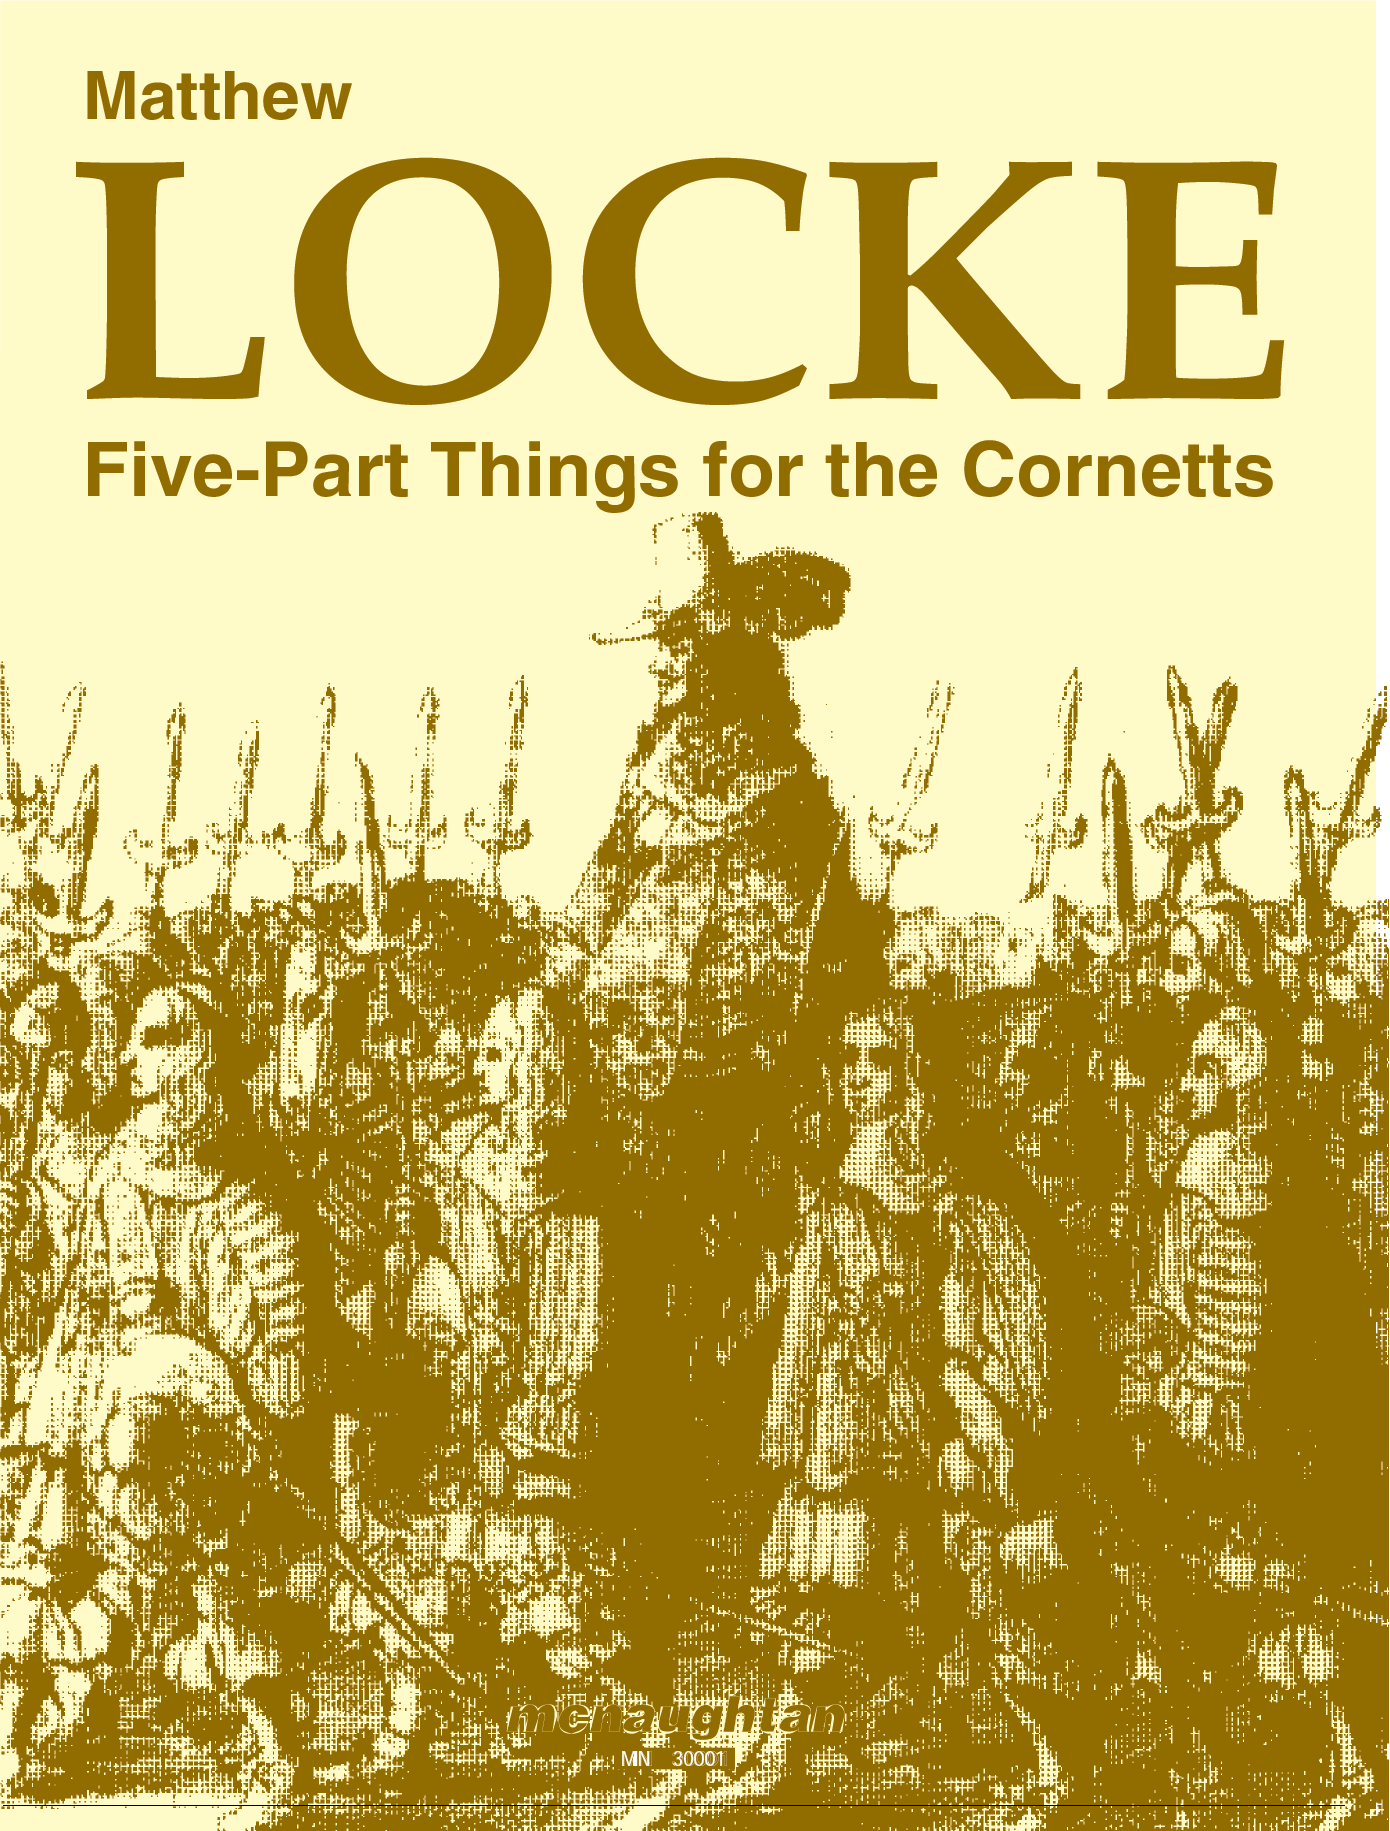 LOCKE Five-Part Things for the Cornetts